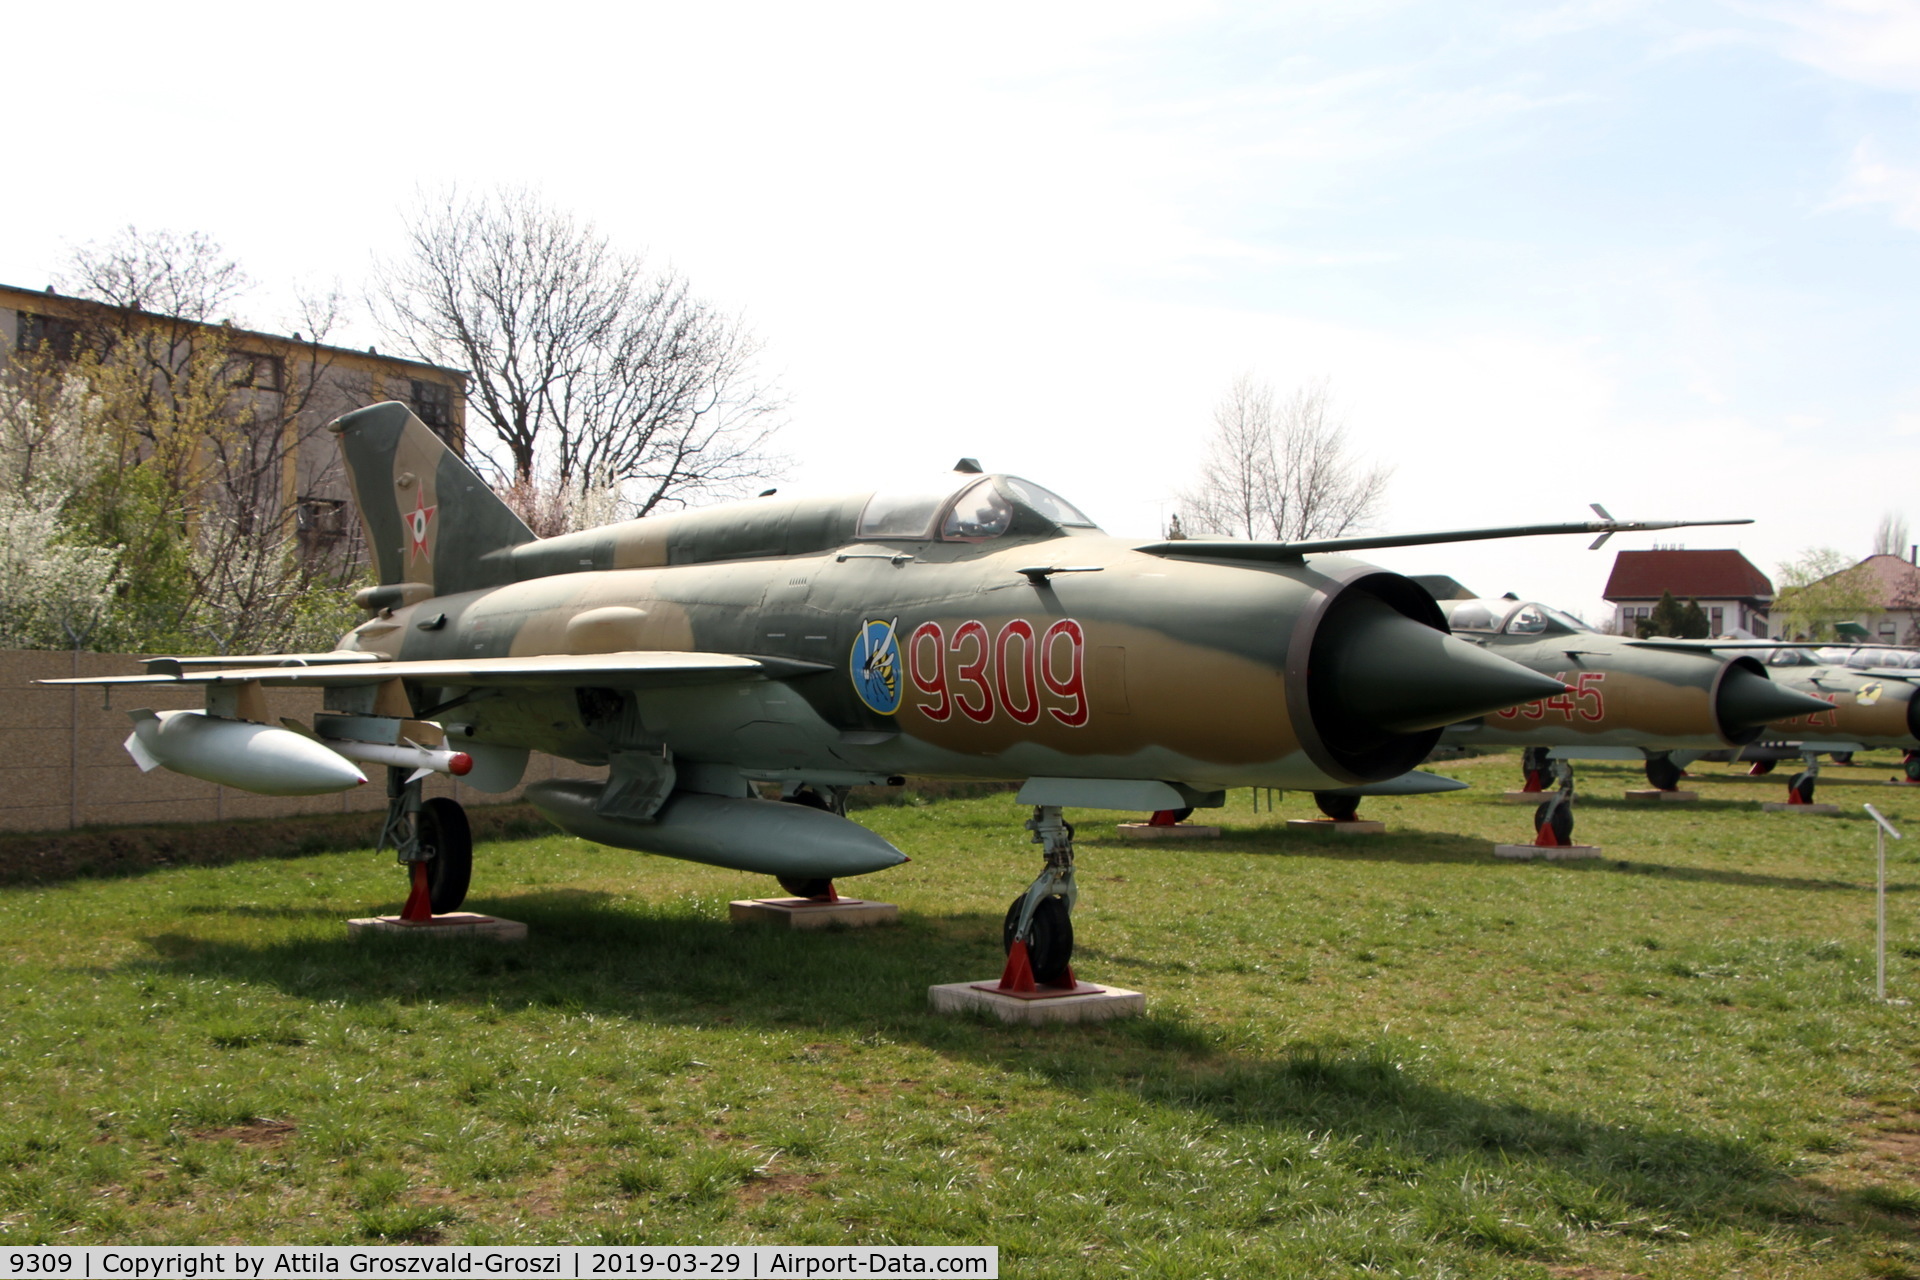 9309, 1974 Mikoyan-Gurevich MiG-21MF C/N 969309, RepTár. Szolnok aviation history museum, Hungary